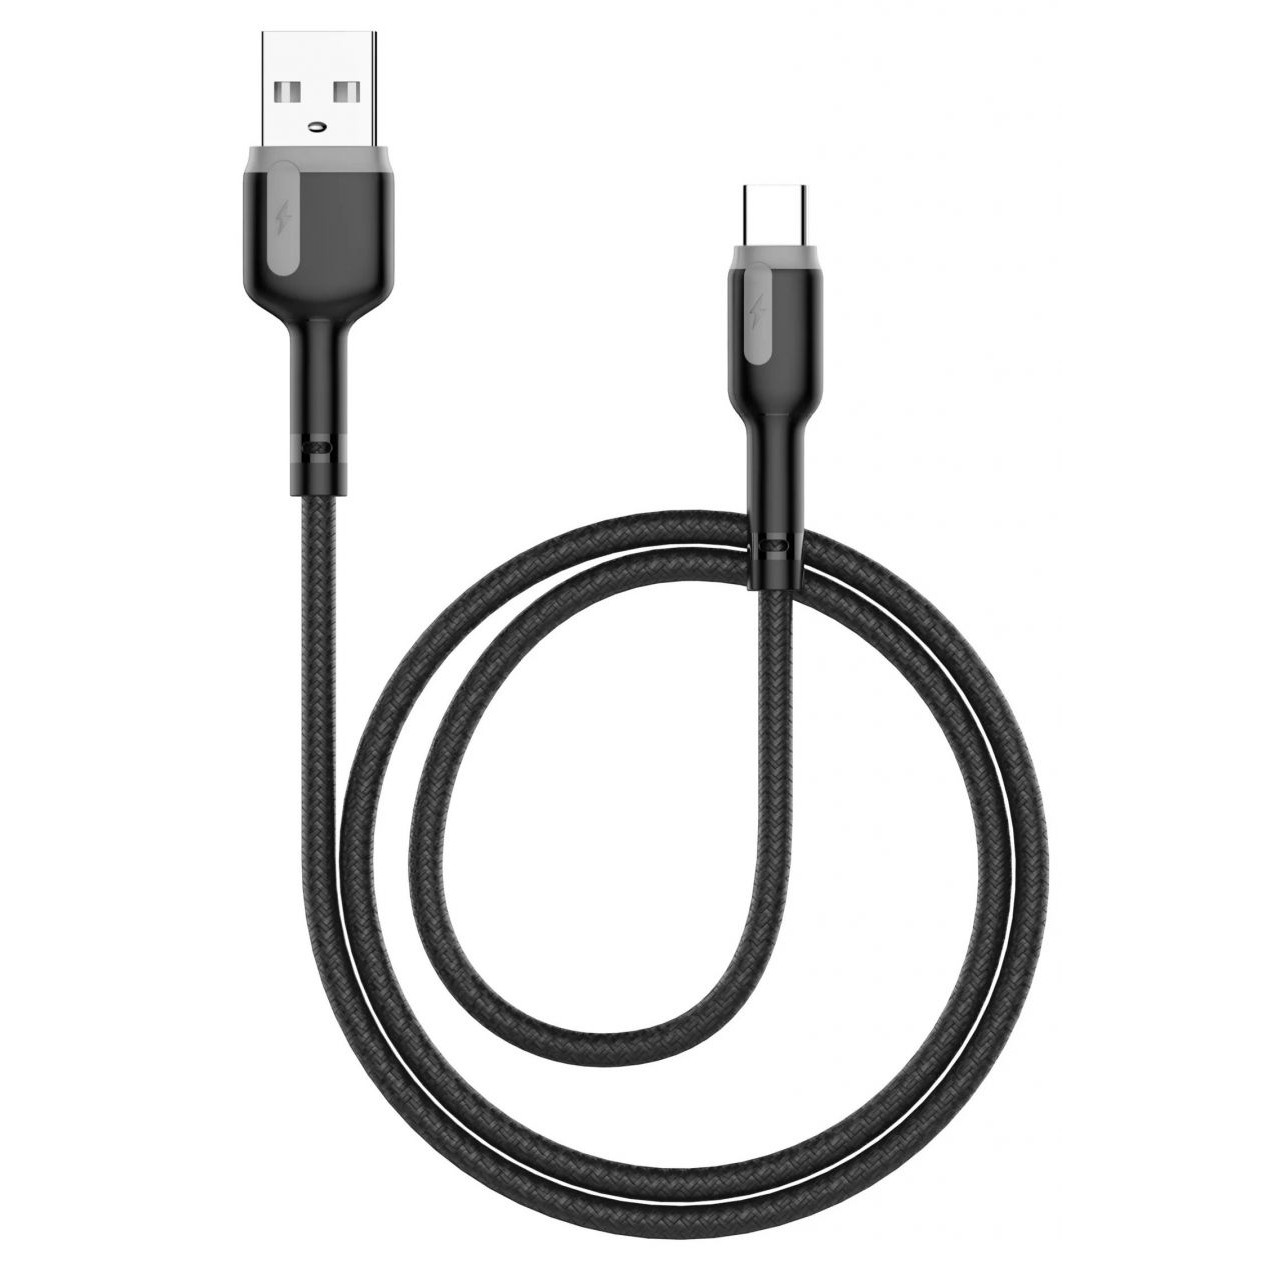 Powermax Alpha Type USB Type-C Cable Black (PWRMXAT2TC) - зображення 1